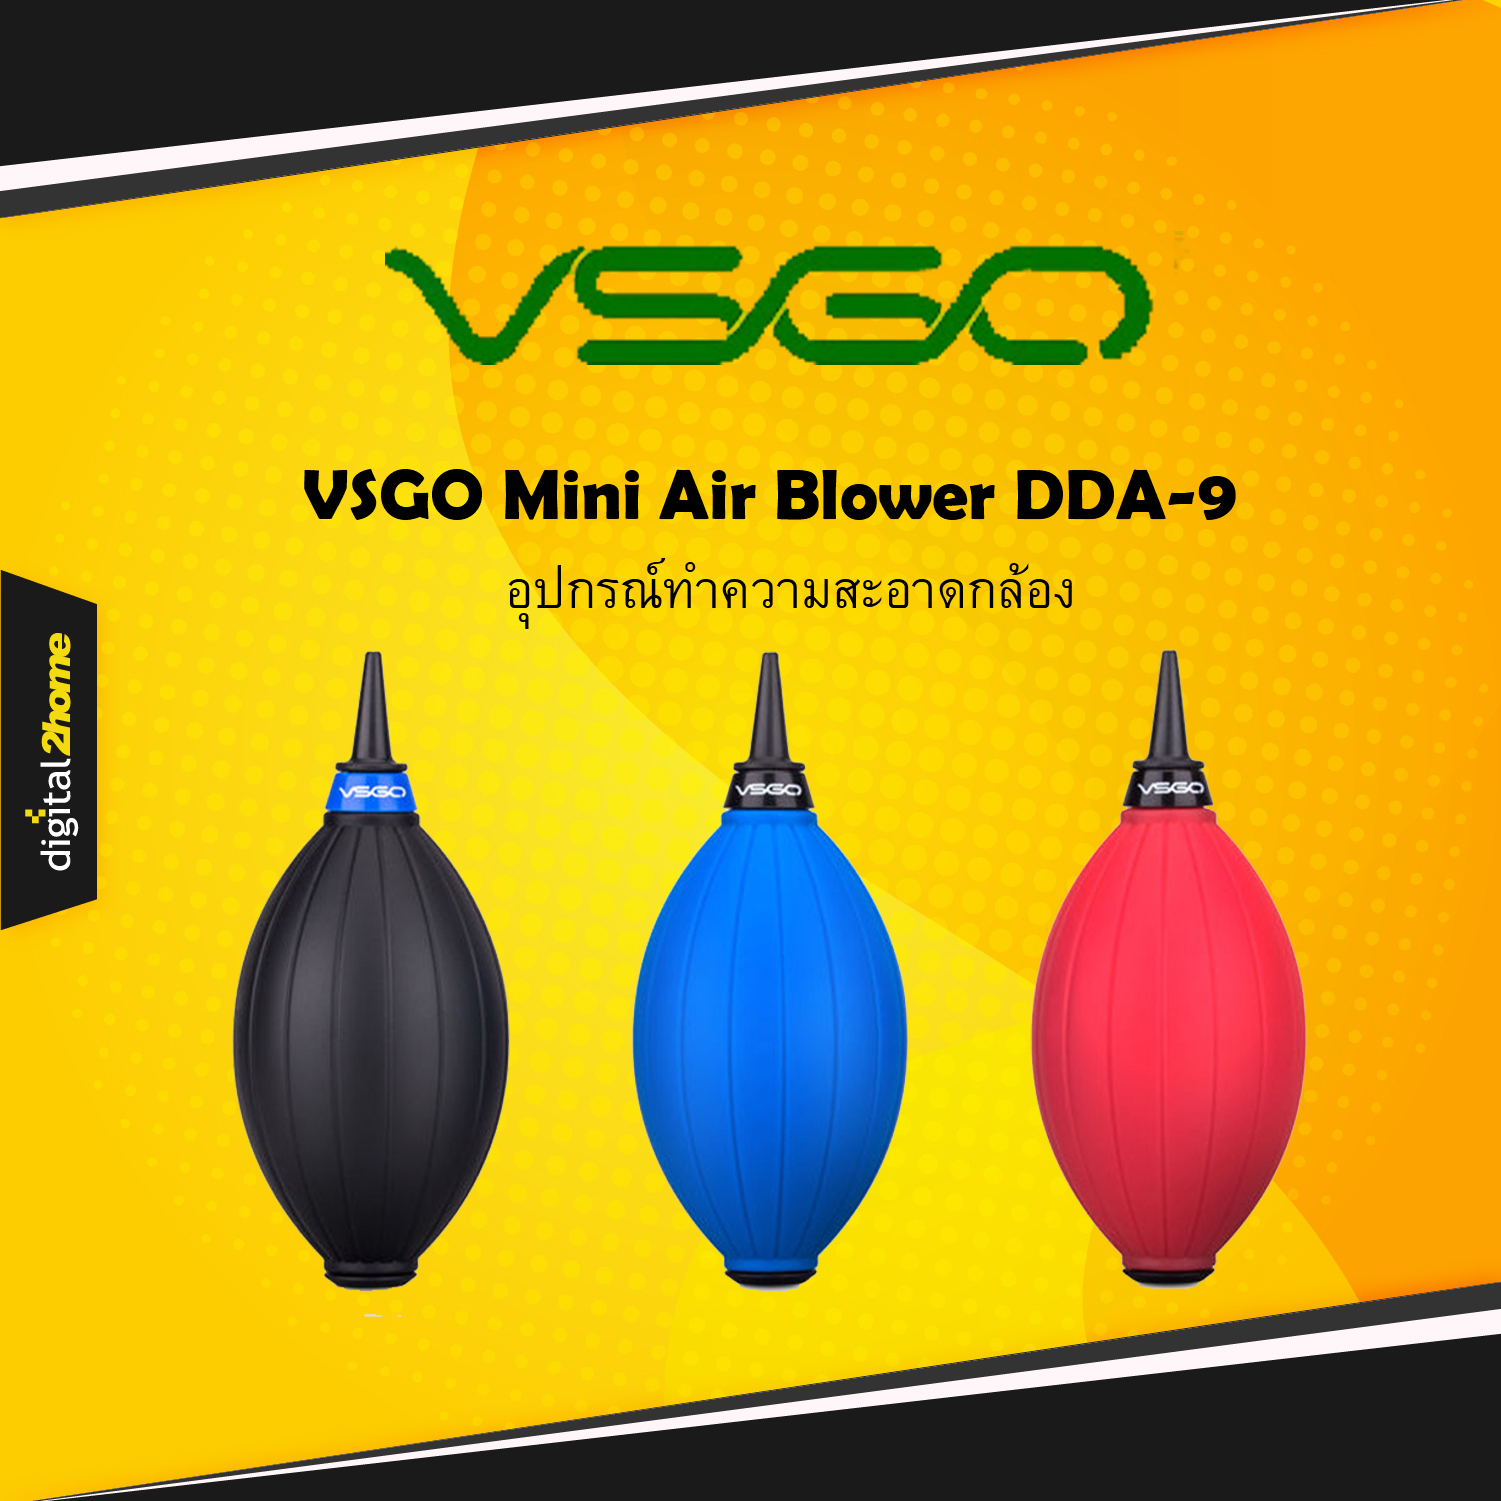 VSGO Mini Air Blower DDA-9